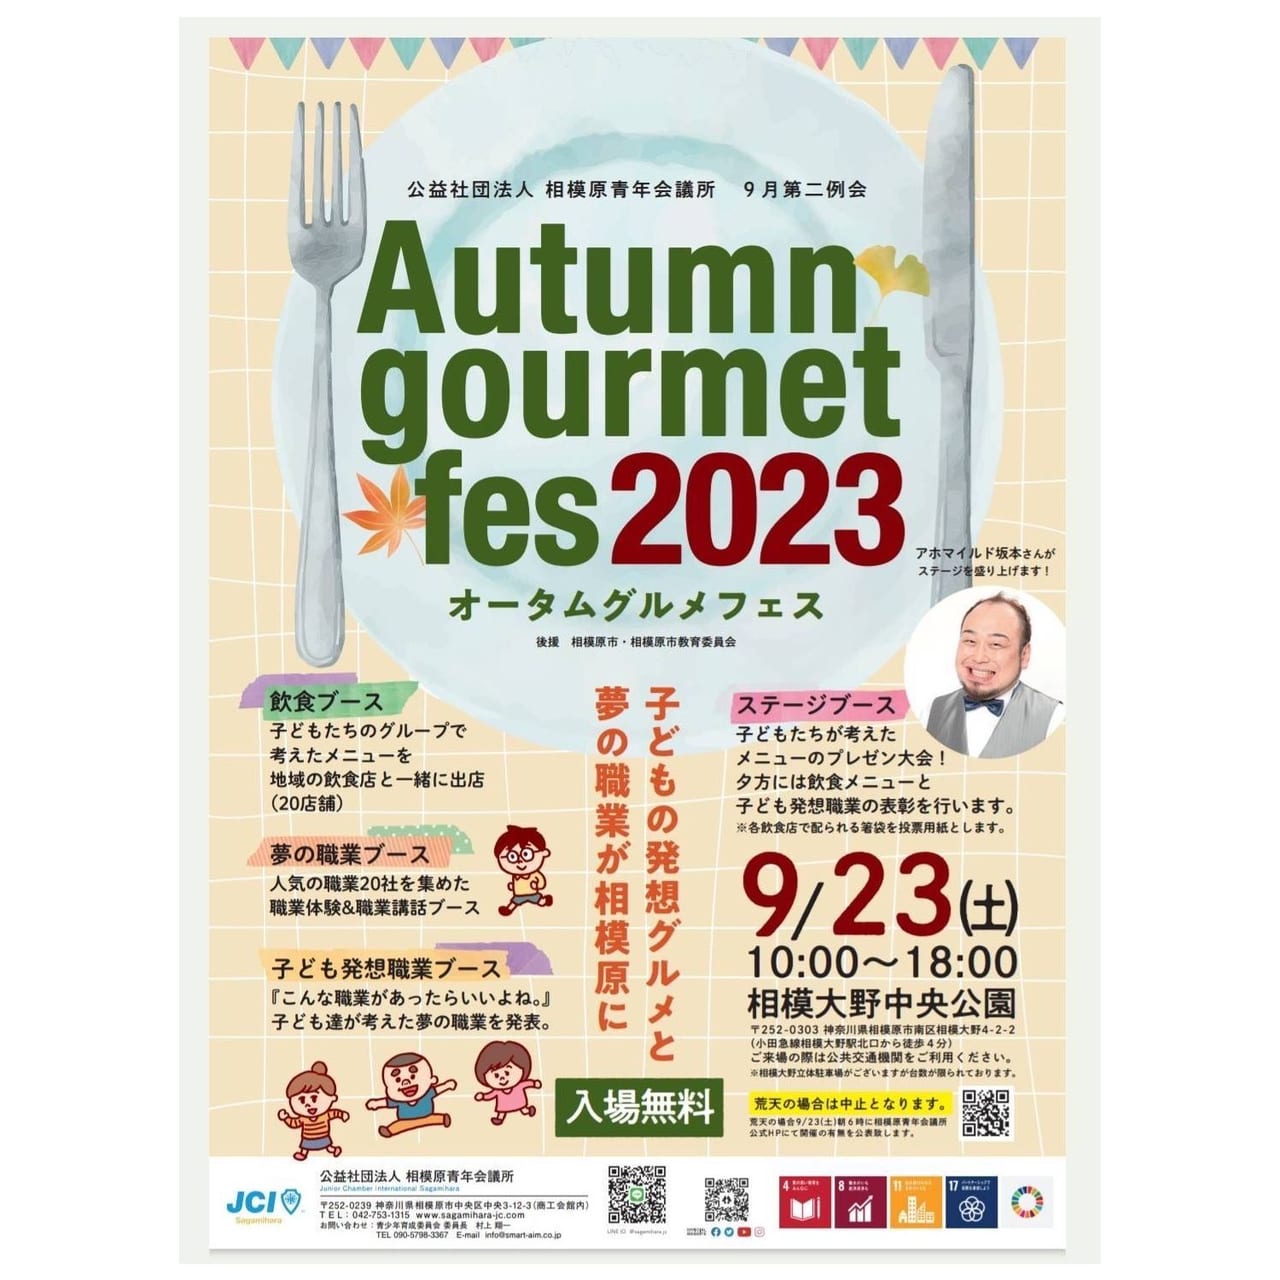 Autumn gourmet fes2023